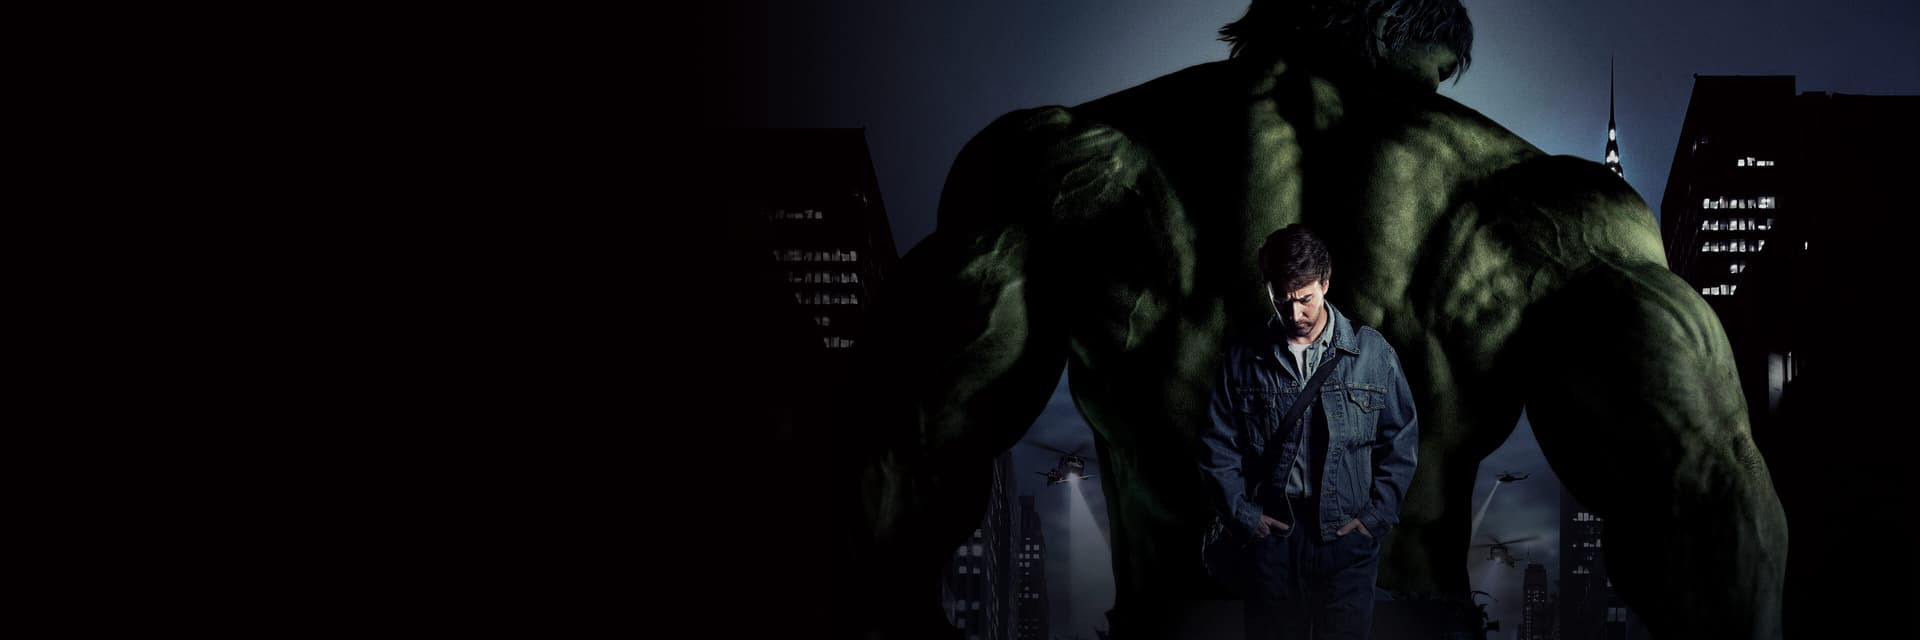 Marvel Studios' The Incredible Hulk Movie Poster